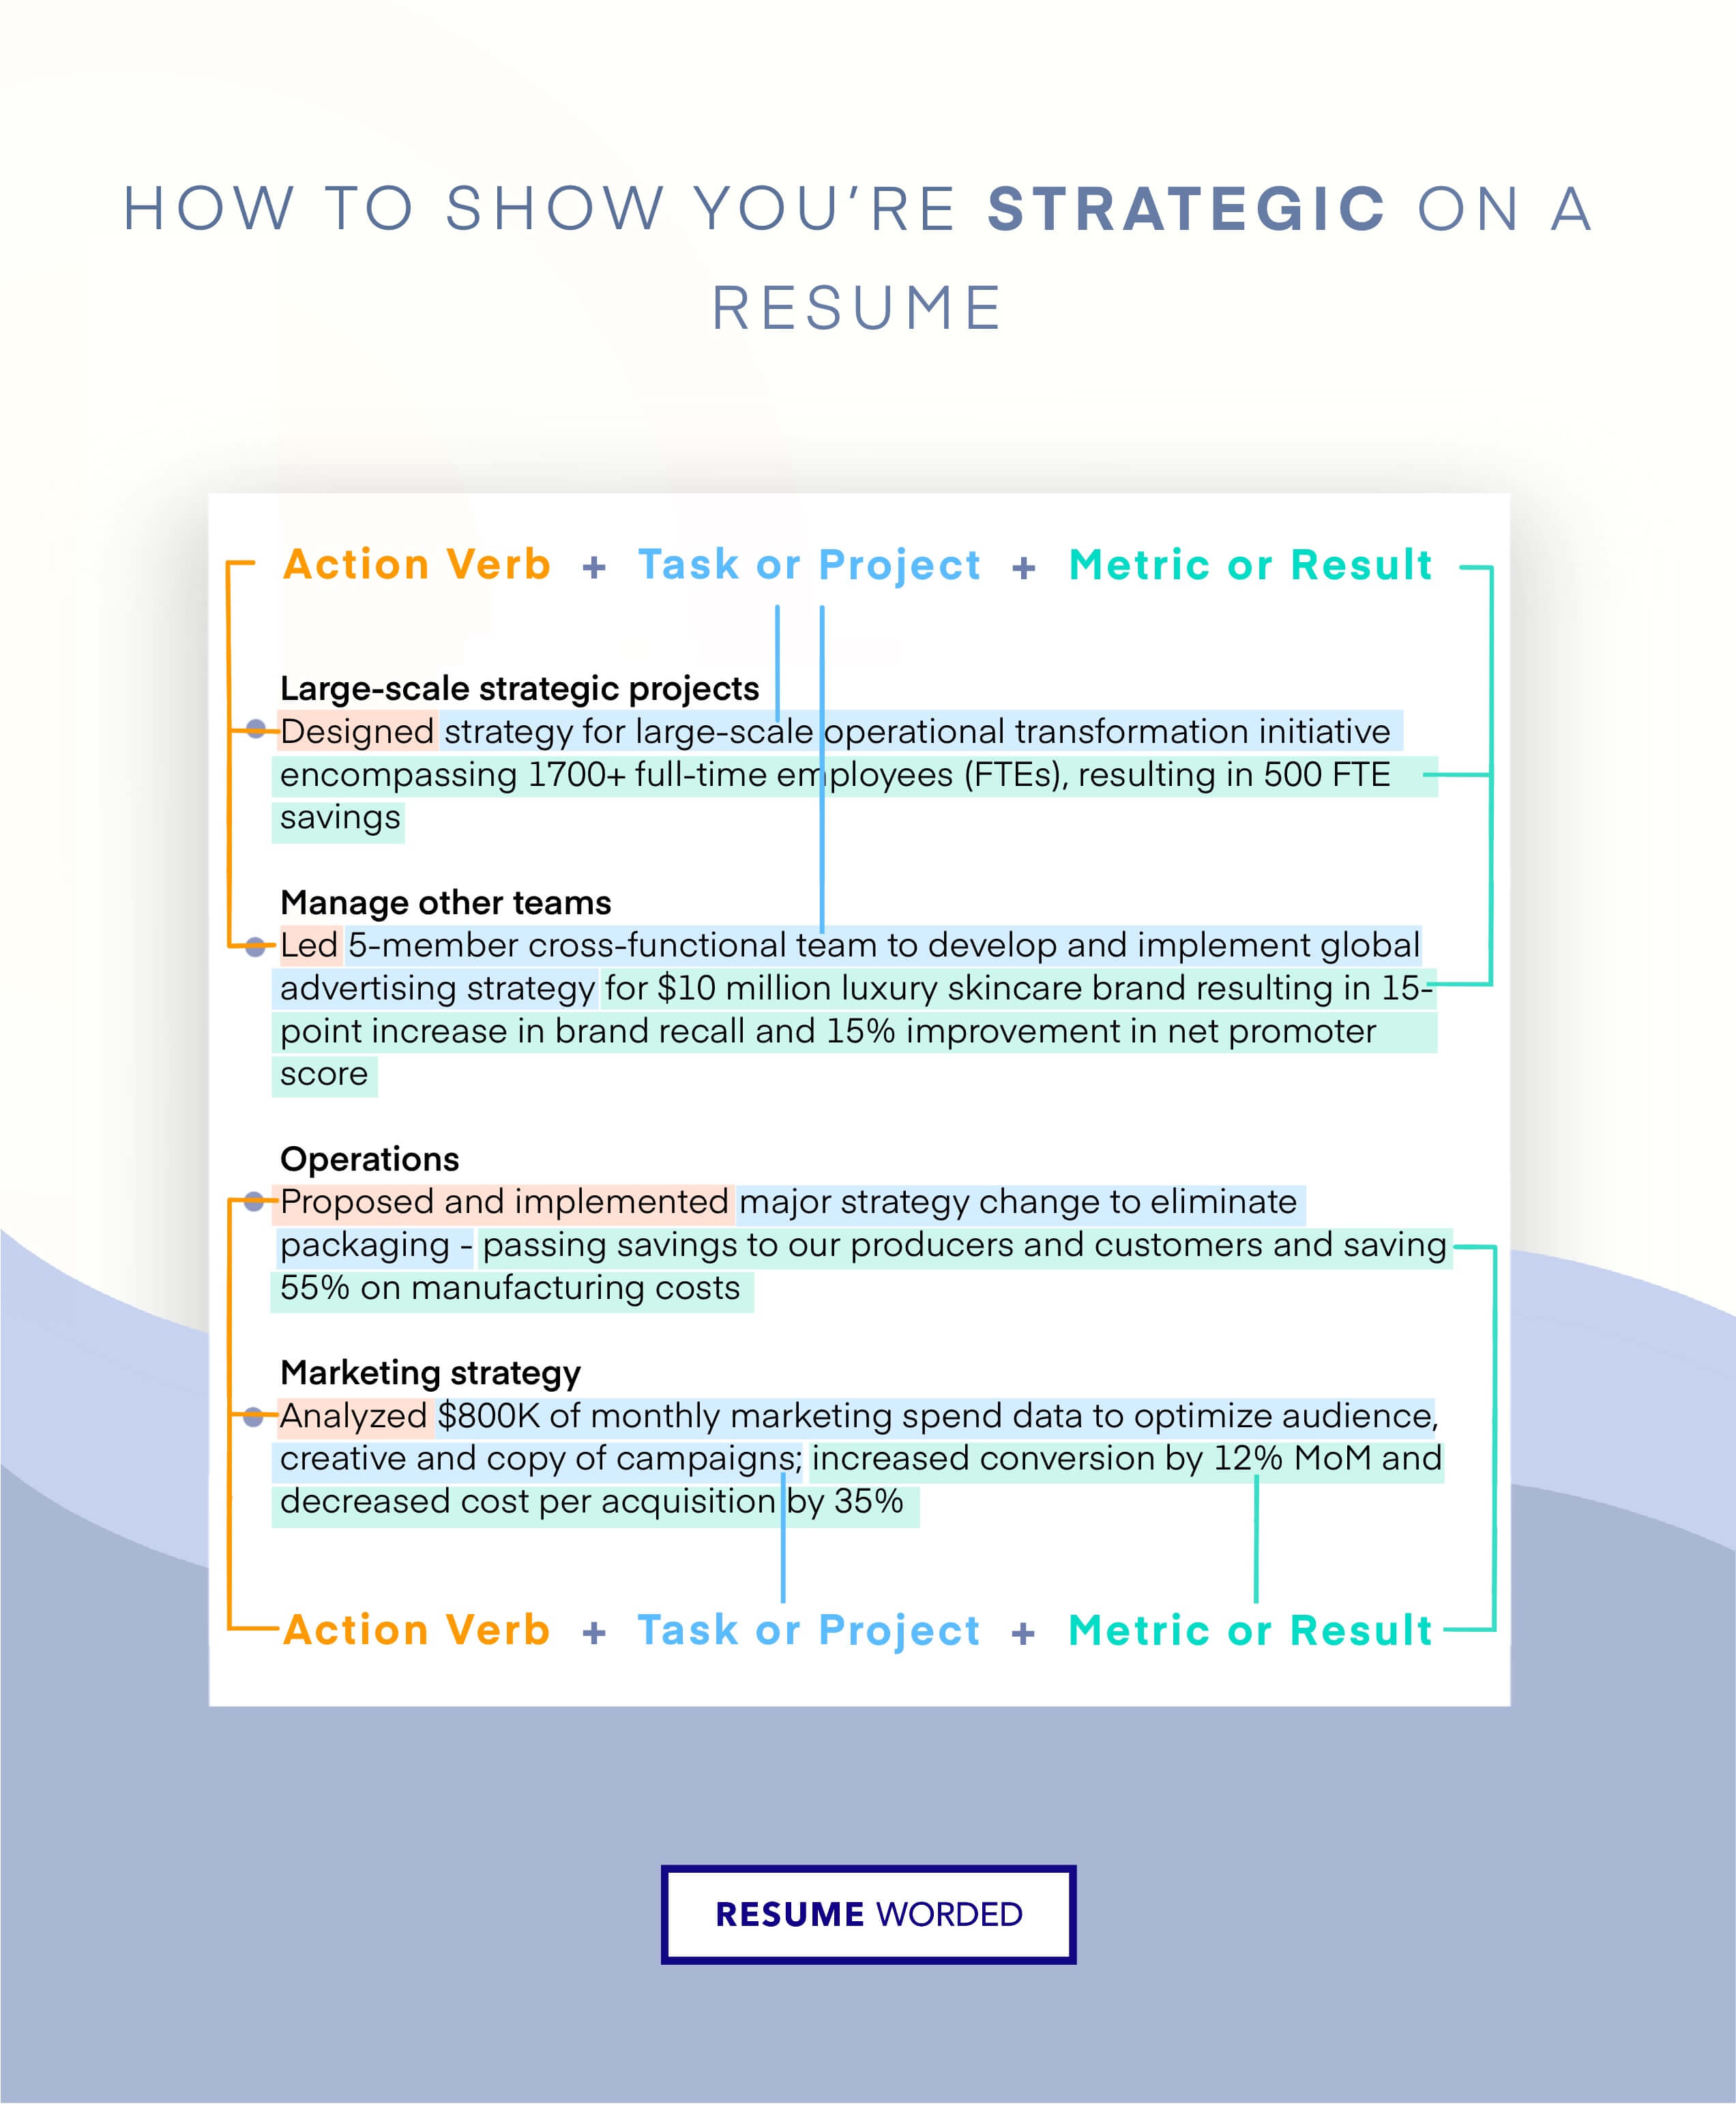 Showcase your strategic thinking - Senior Social Media Manager CV